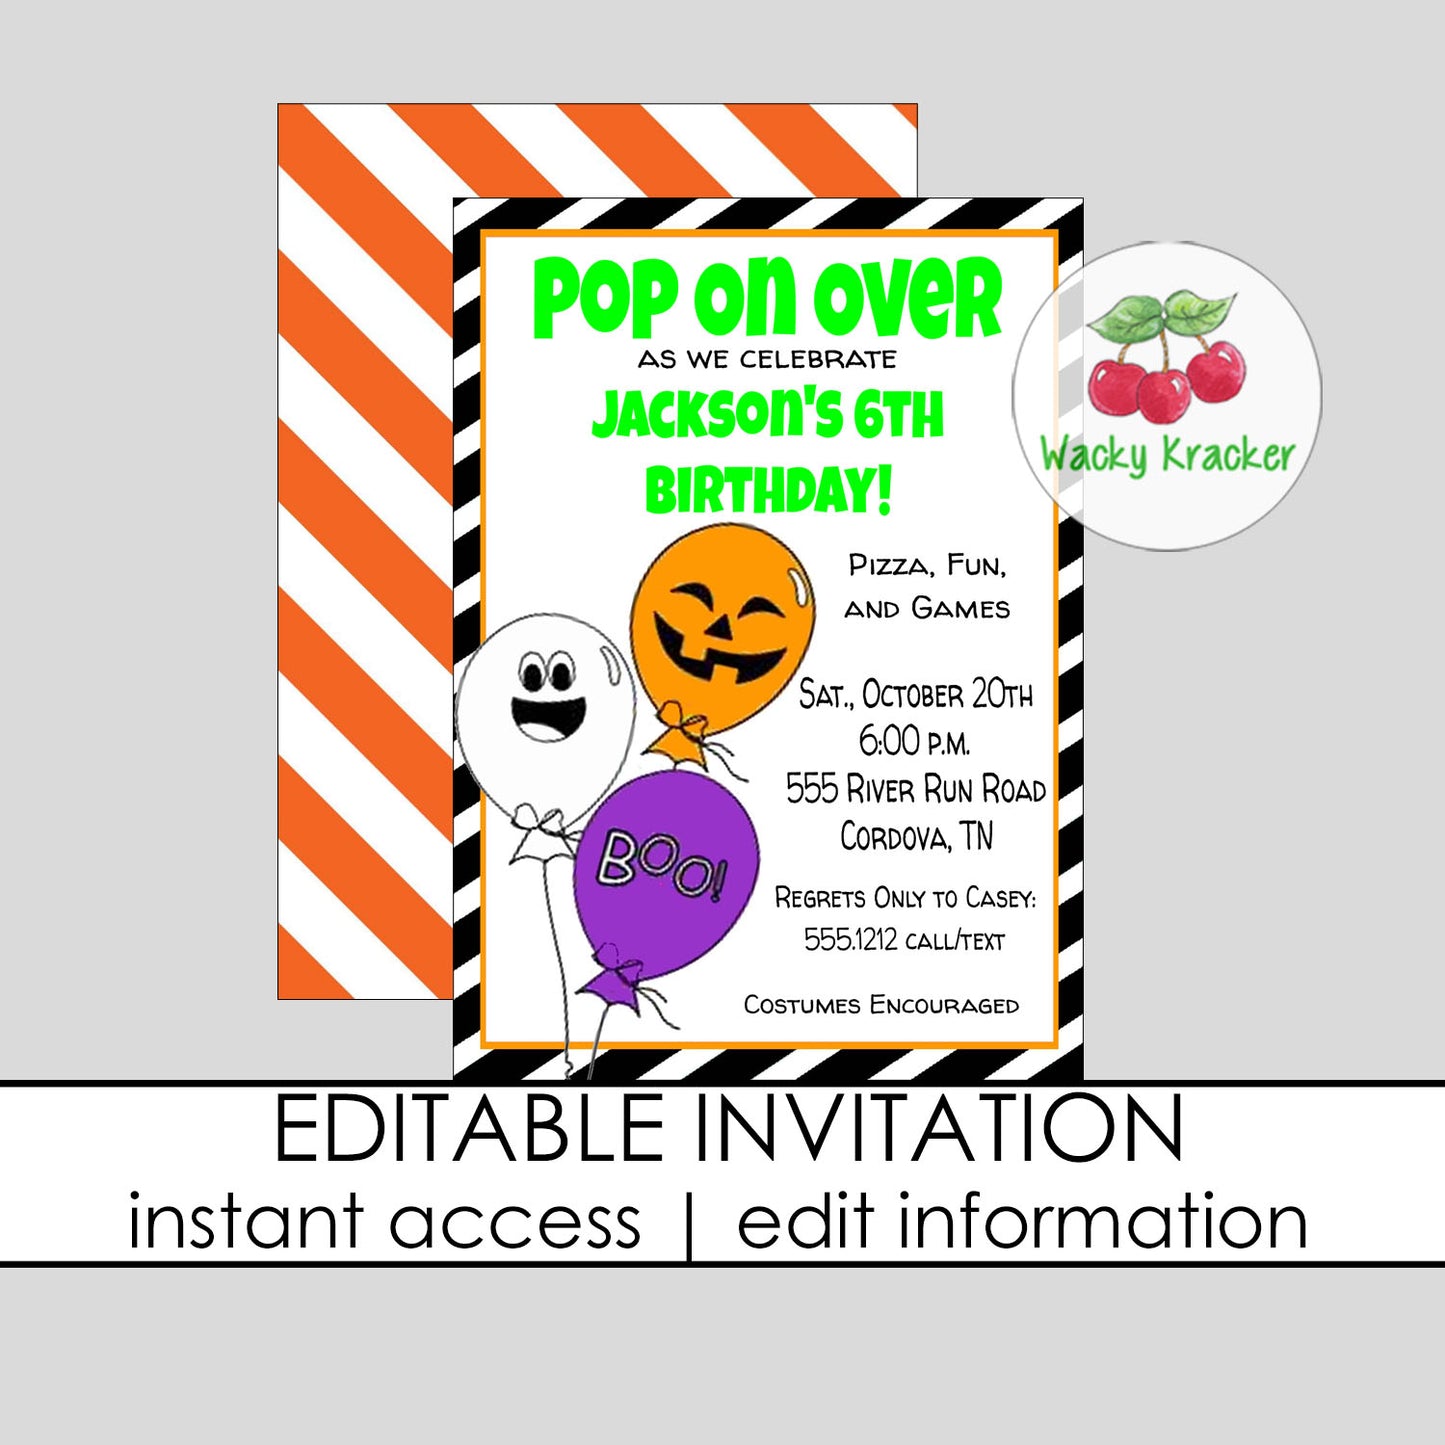 Pop On Over Invitation